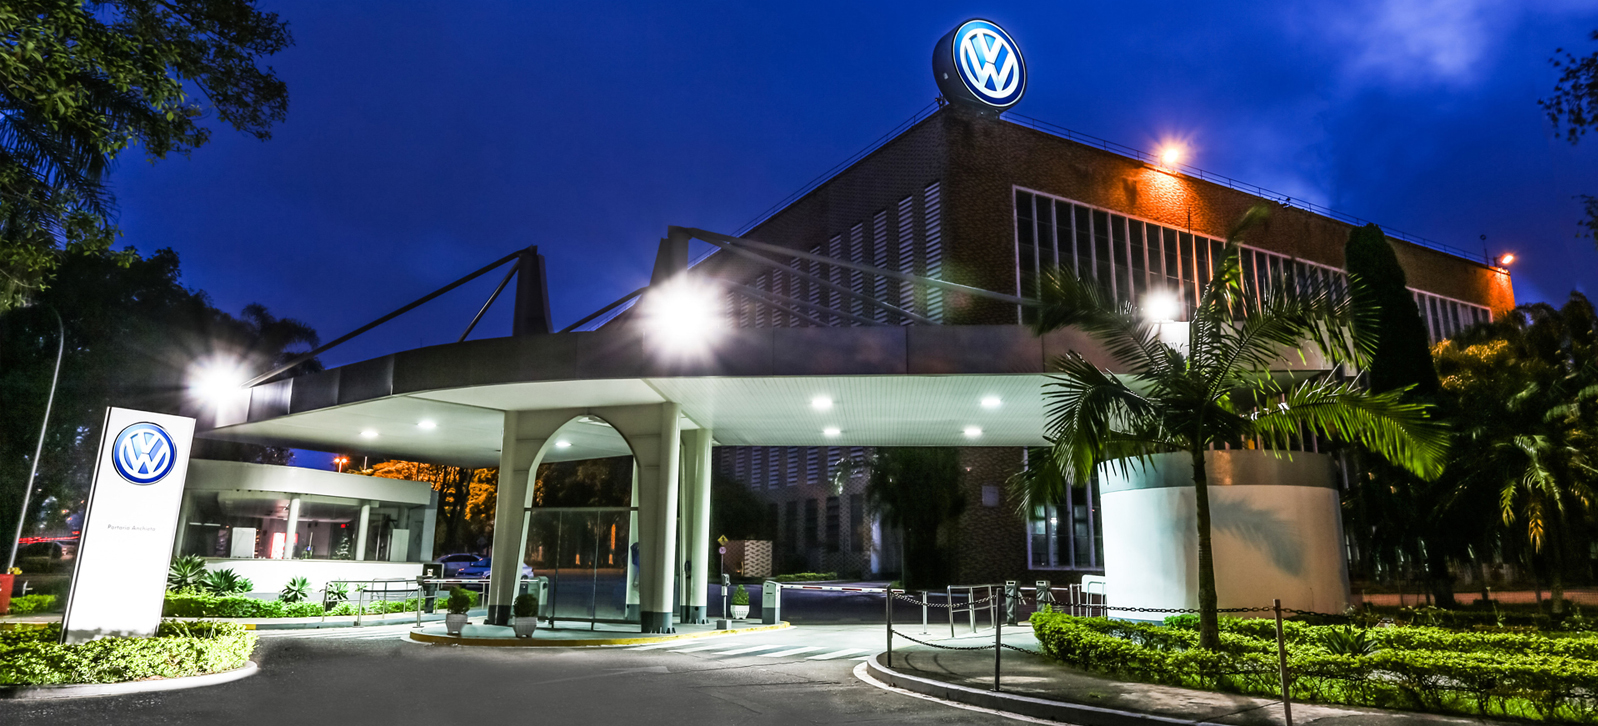 Foto noturna da fachada VW